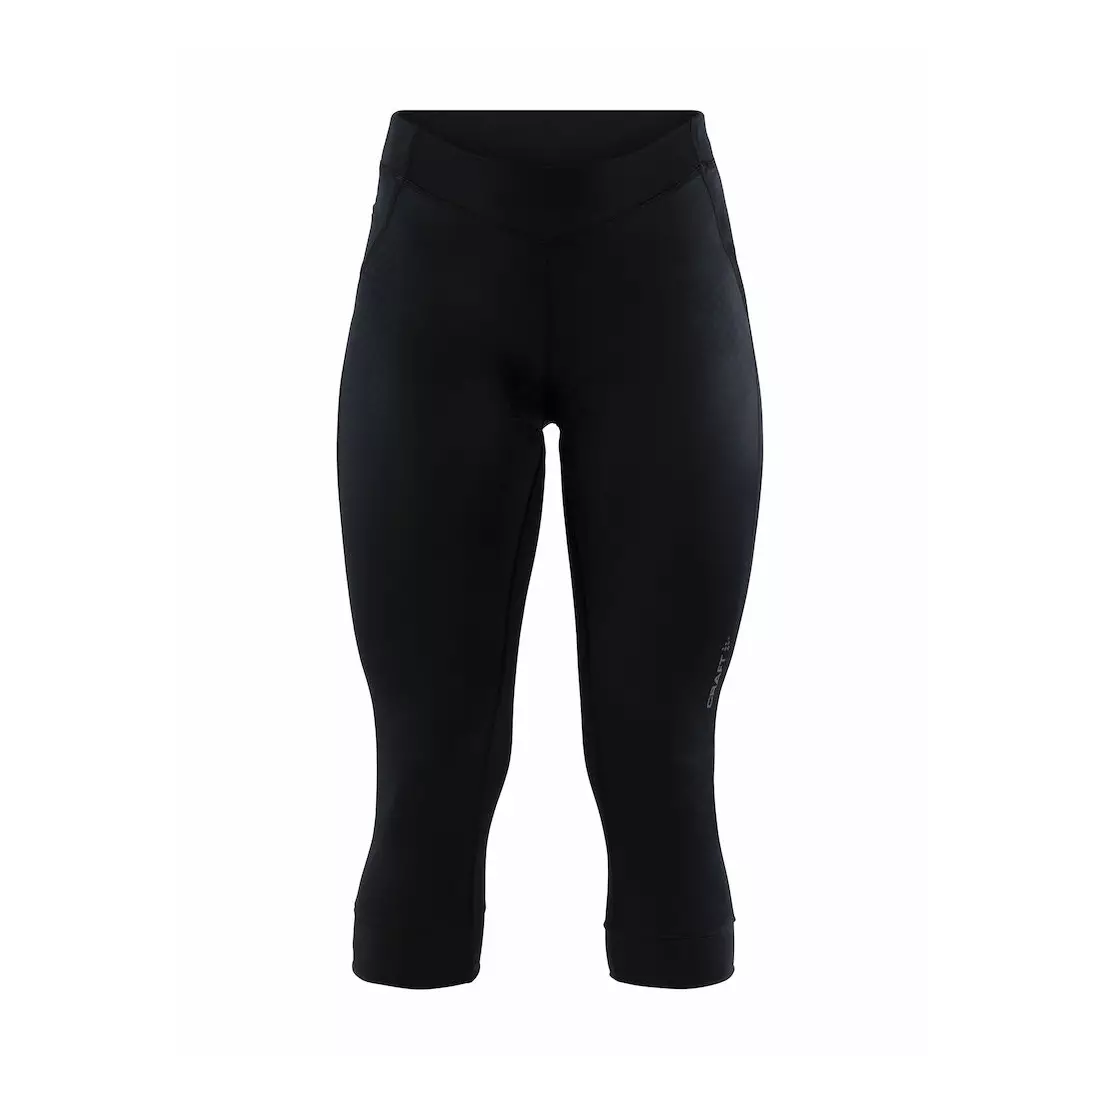 CRAFT RISE women's 3/4 cycling shorts, black 1906077-999999